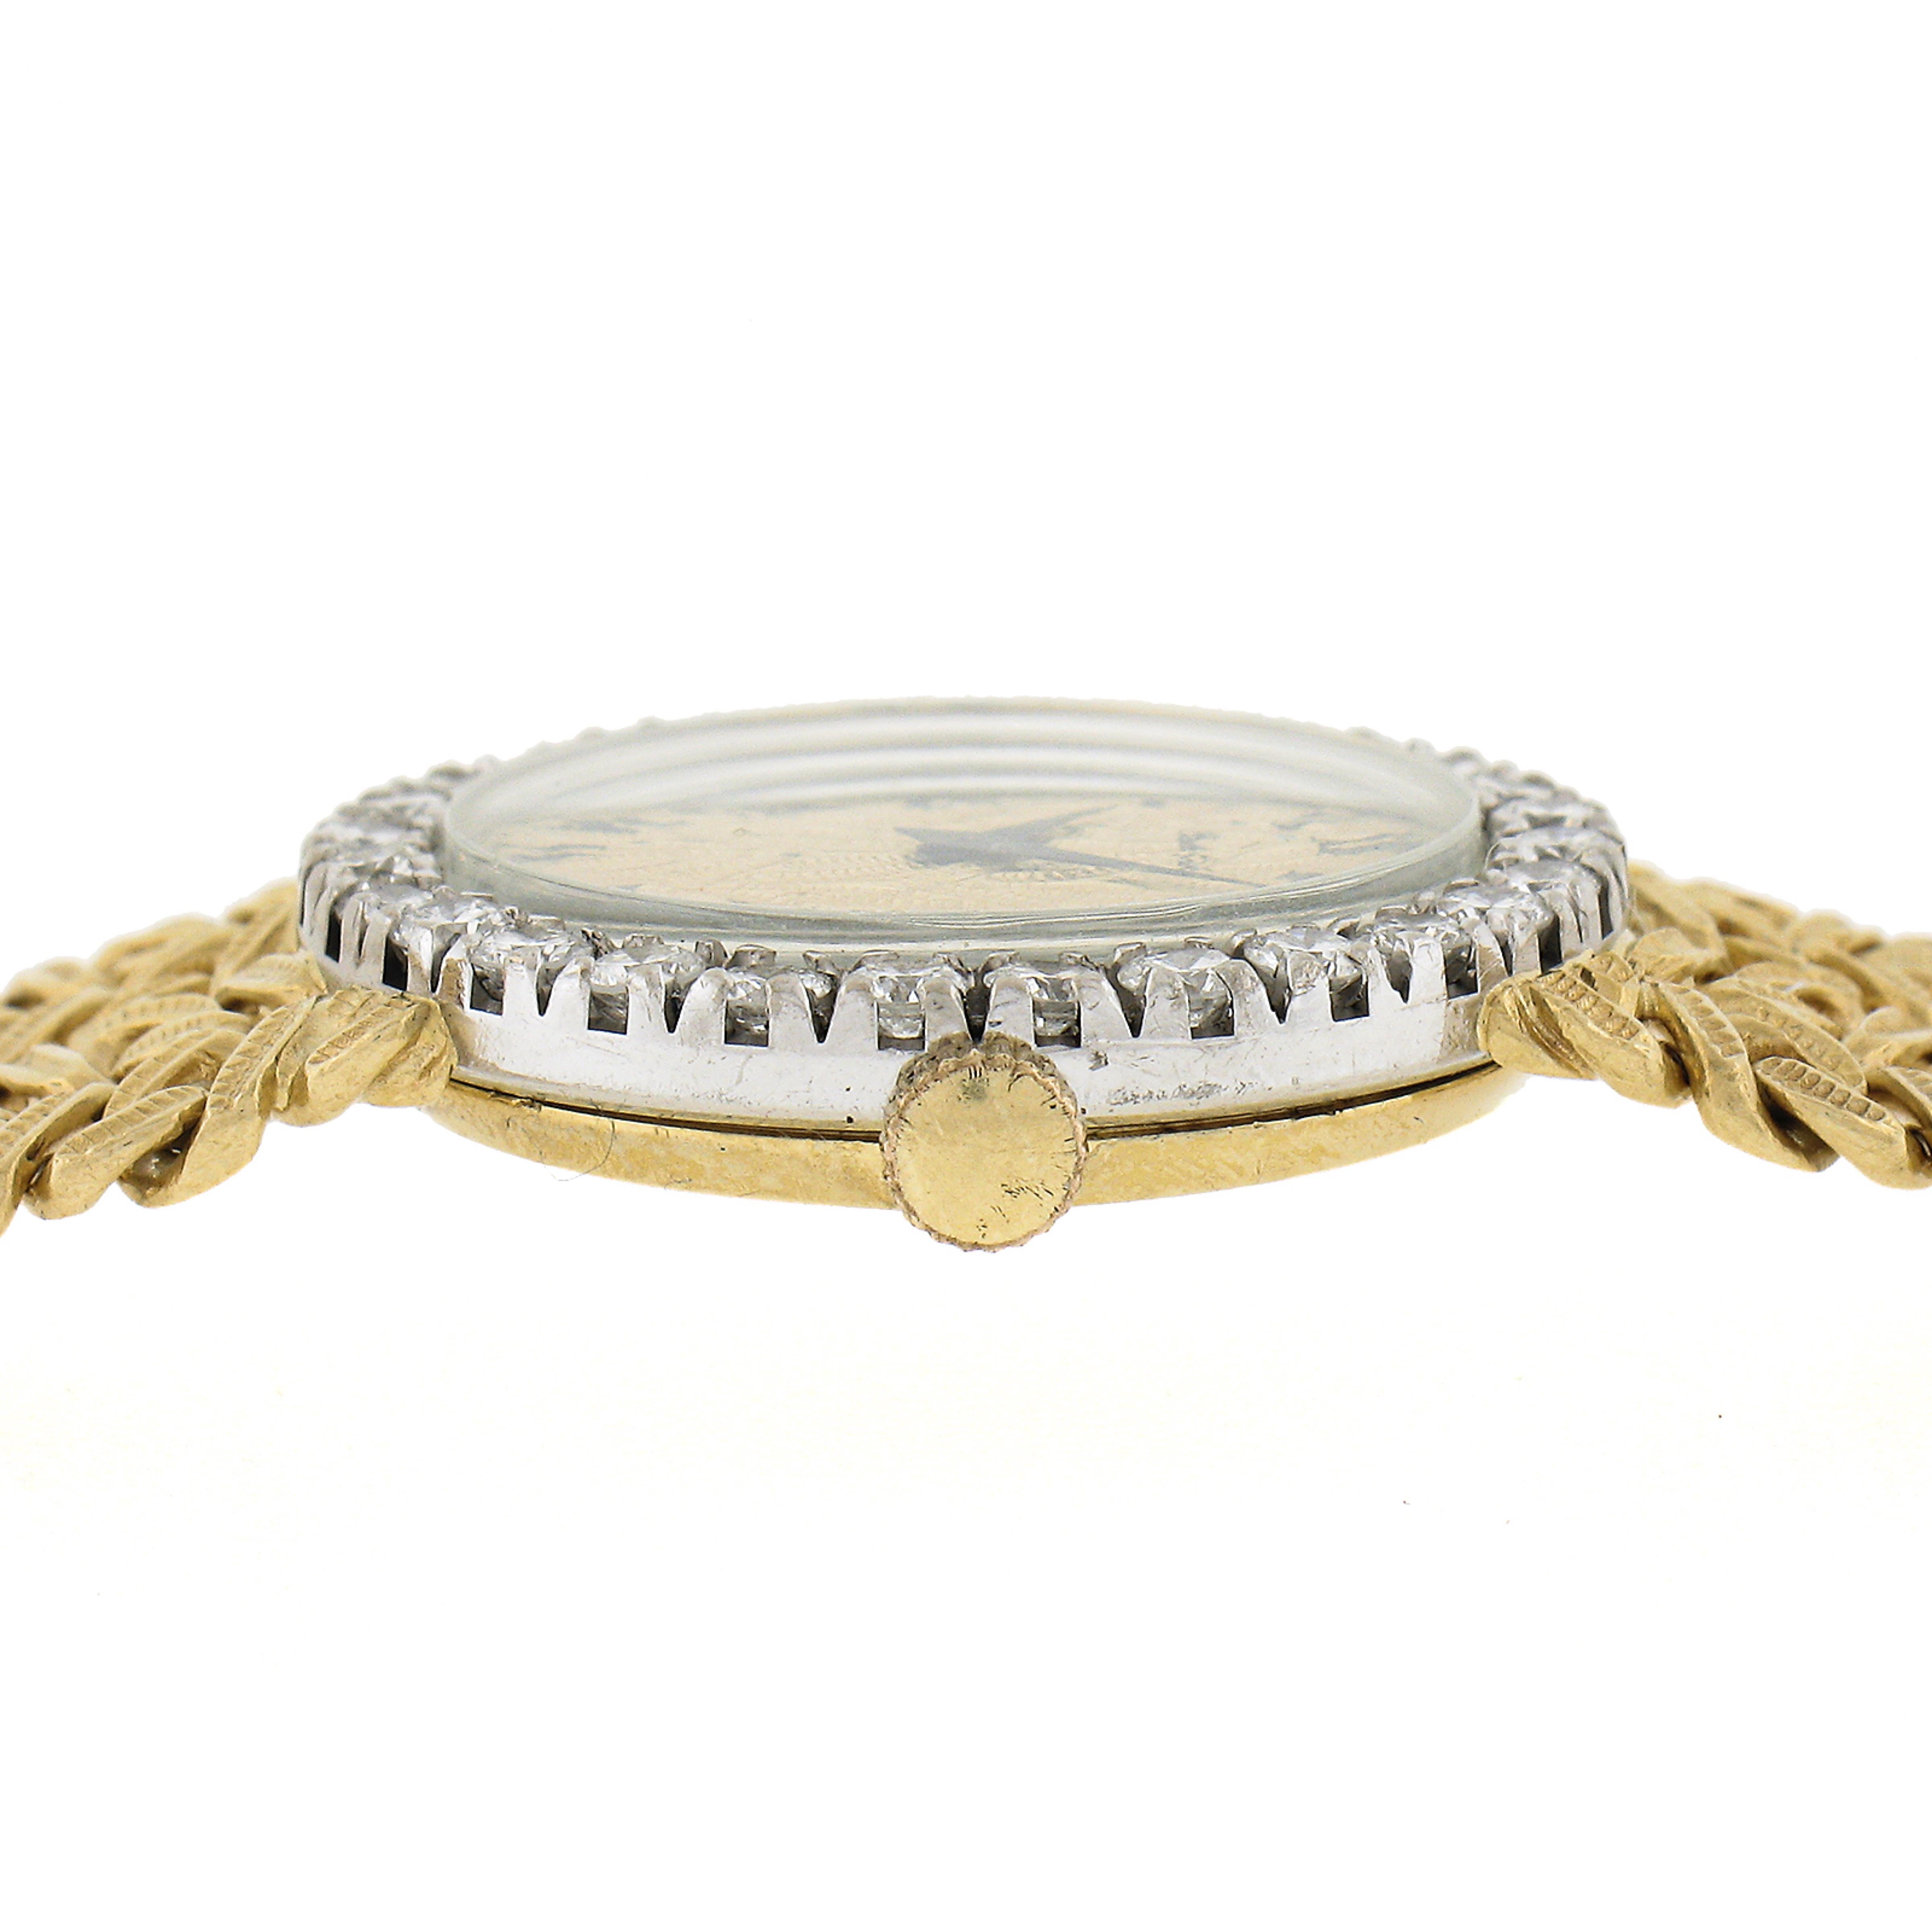 Vintage Bueche Girod 18k Gold 17j Mechanical Round Diamond Wrist Watch Bracelet In Good Condition For Sale In Montclair, NJ